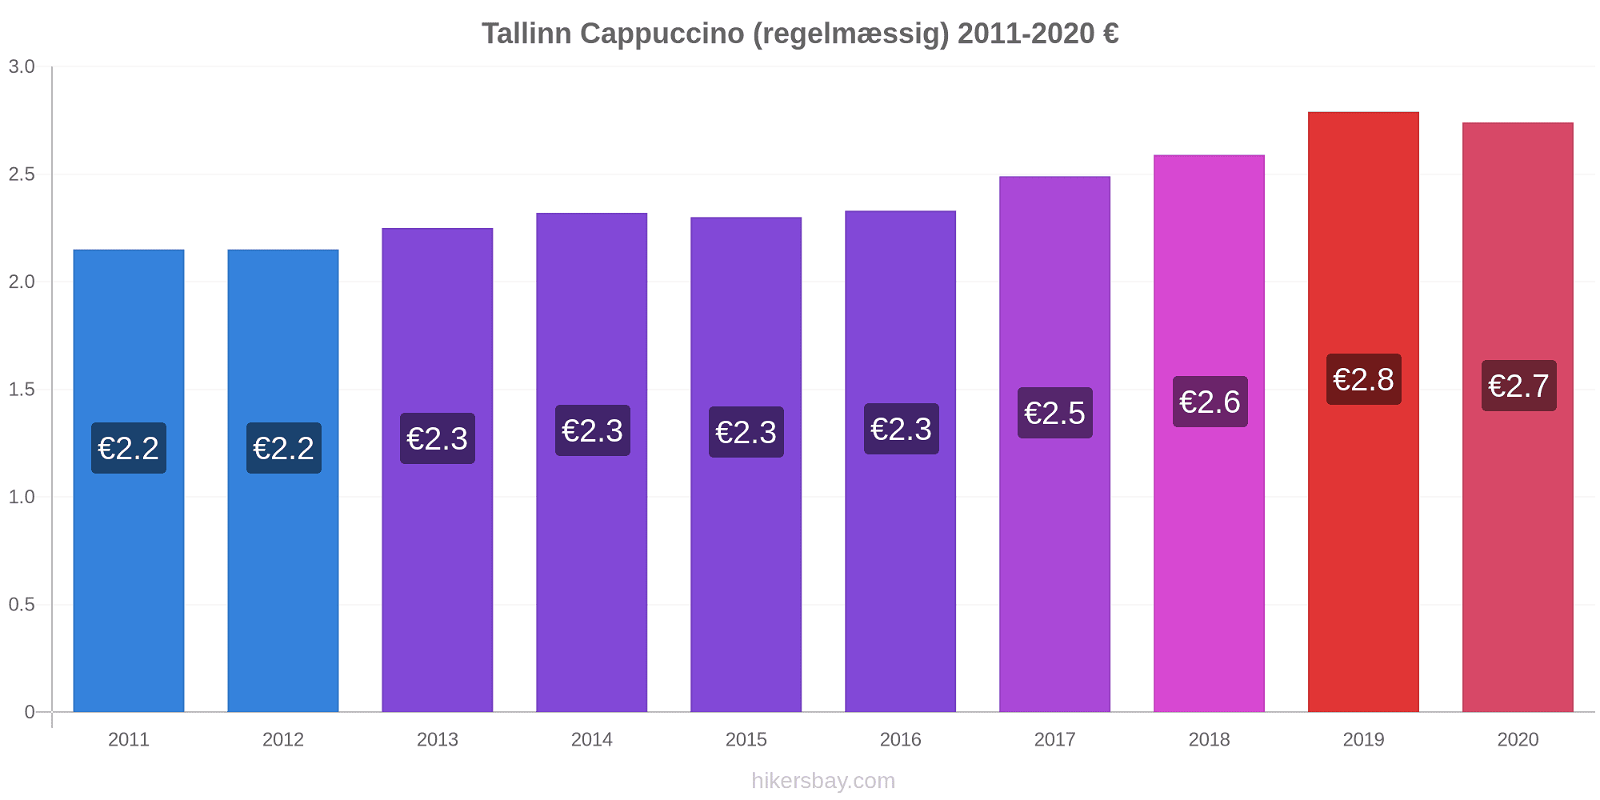 Tallinn prisændringer Cappuccino (regelmæssig) hikersbay.com